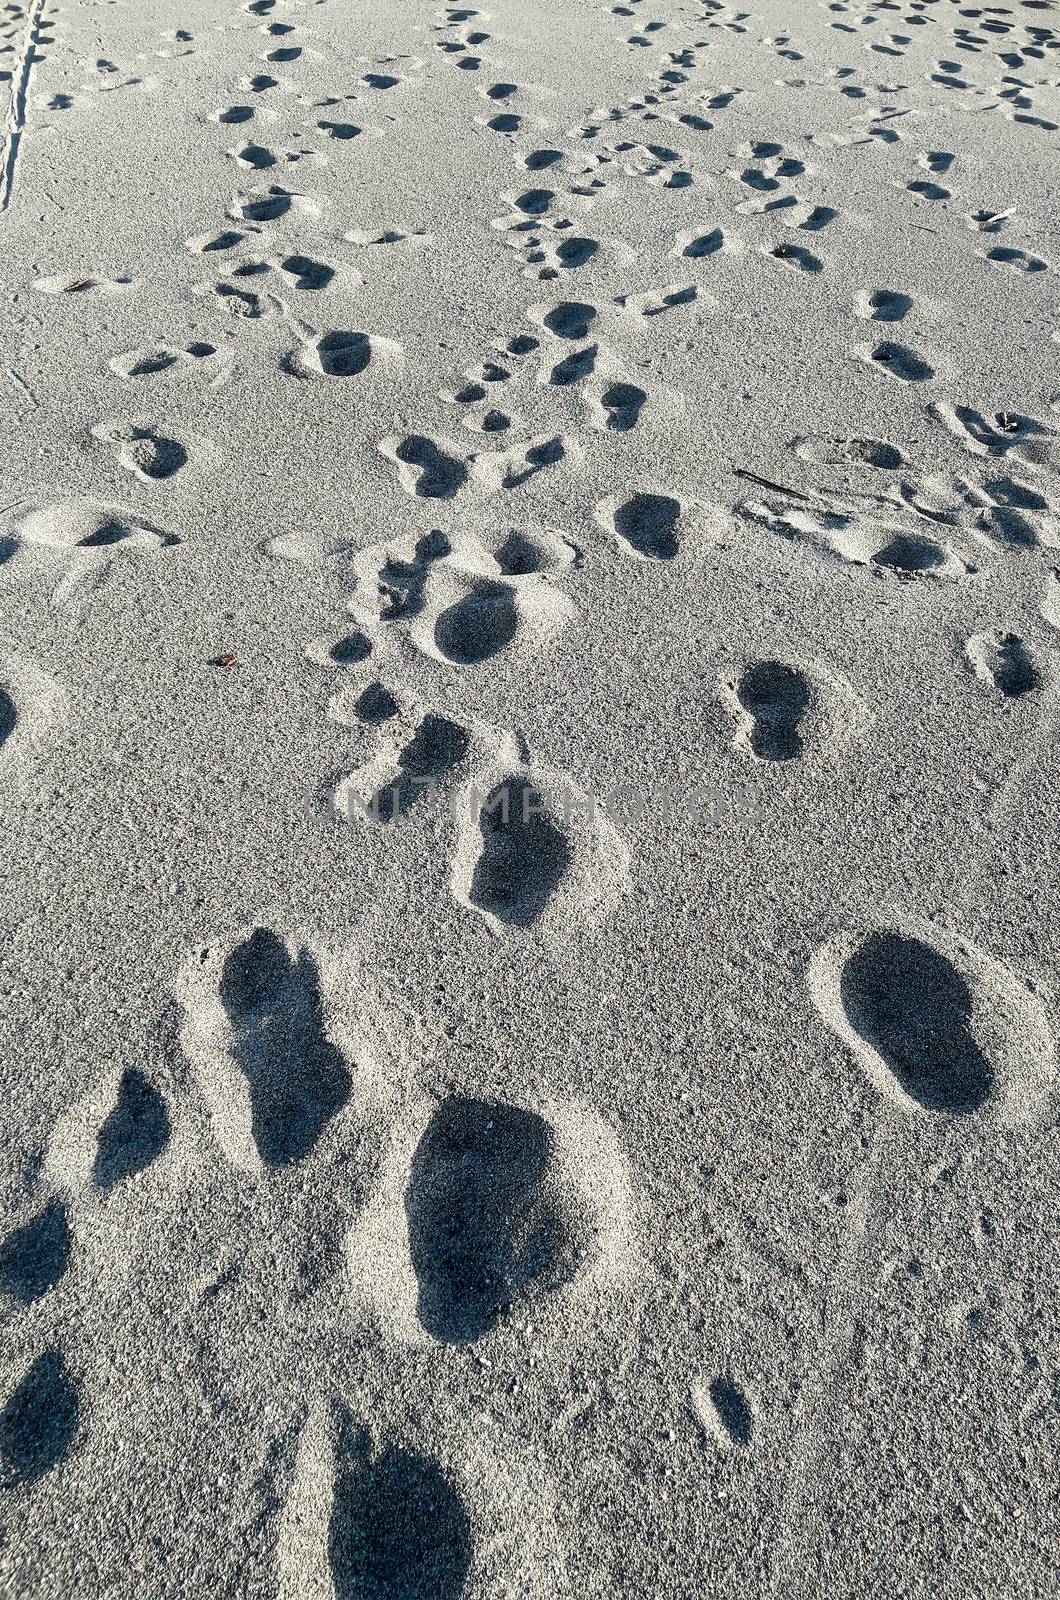 Many footsteps on a sandy beach by marcorubino